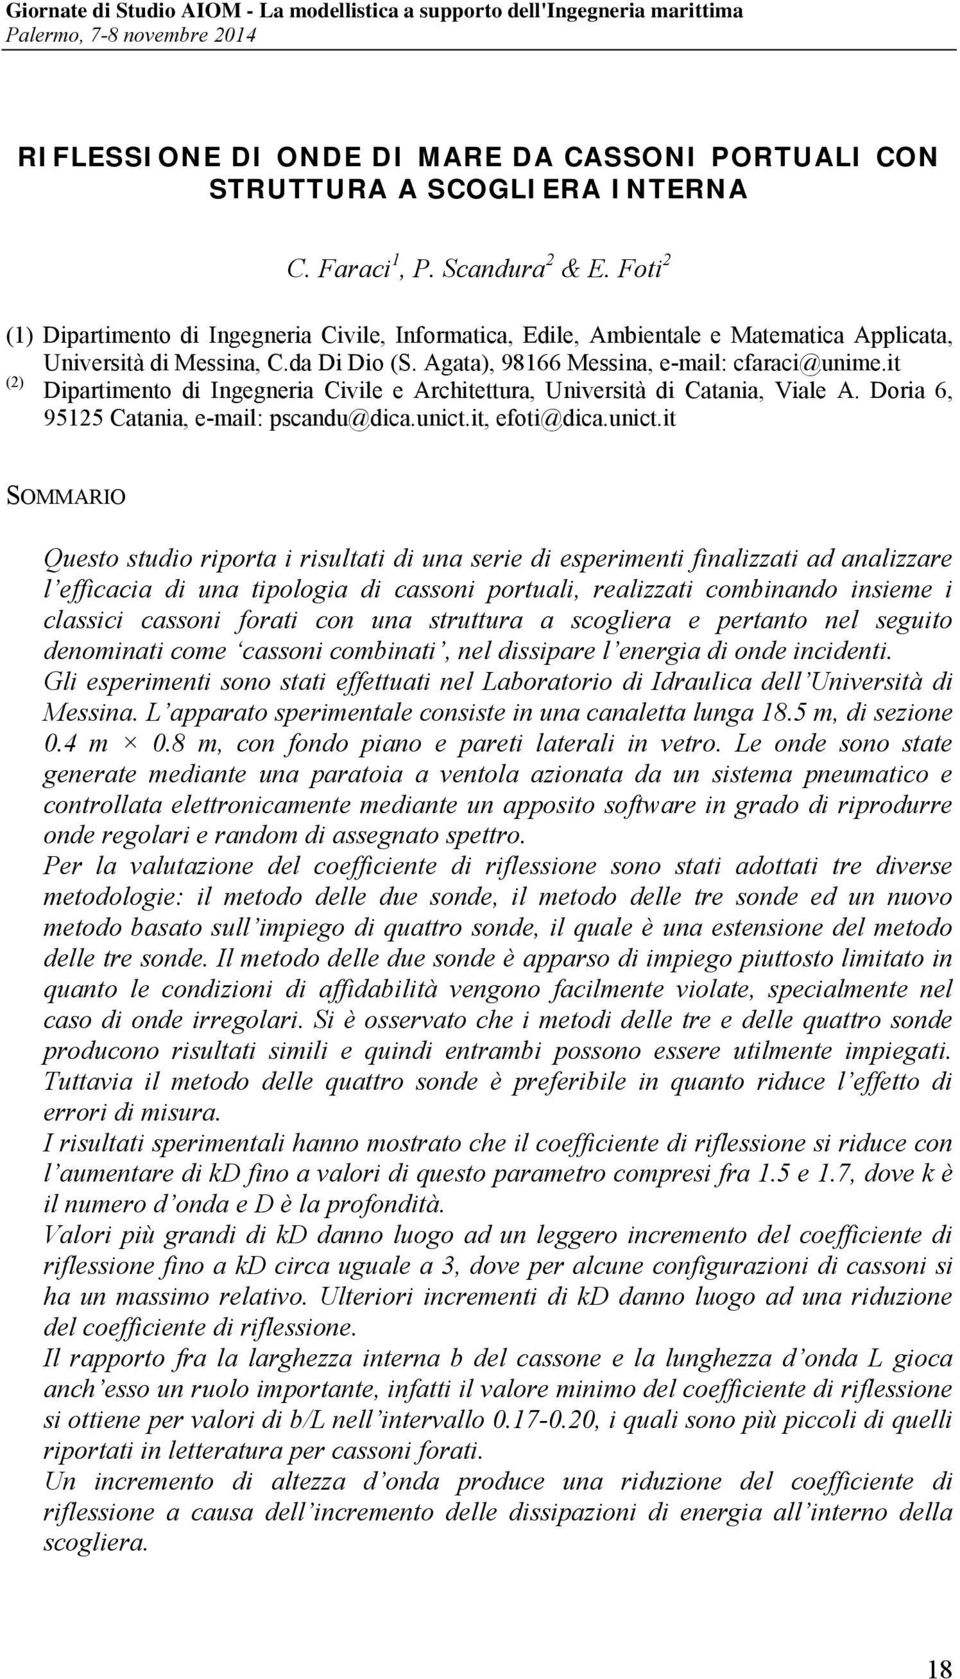 it (2) Dipartimento di Ingegneria Civile e Architettura, Università di Catania, Viale A. Doria 6, 95125 Catania, e-mail: pscandu@dica.unict.